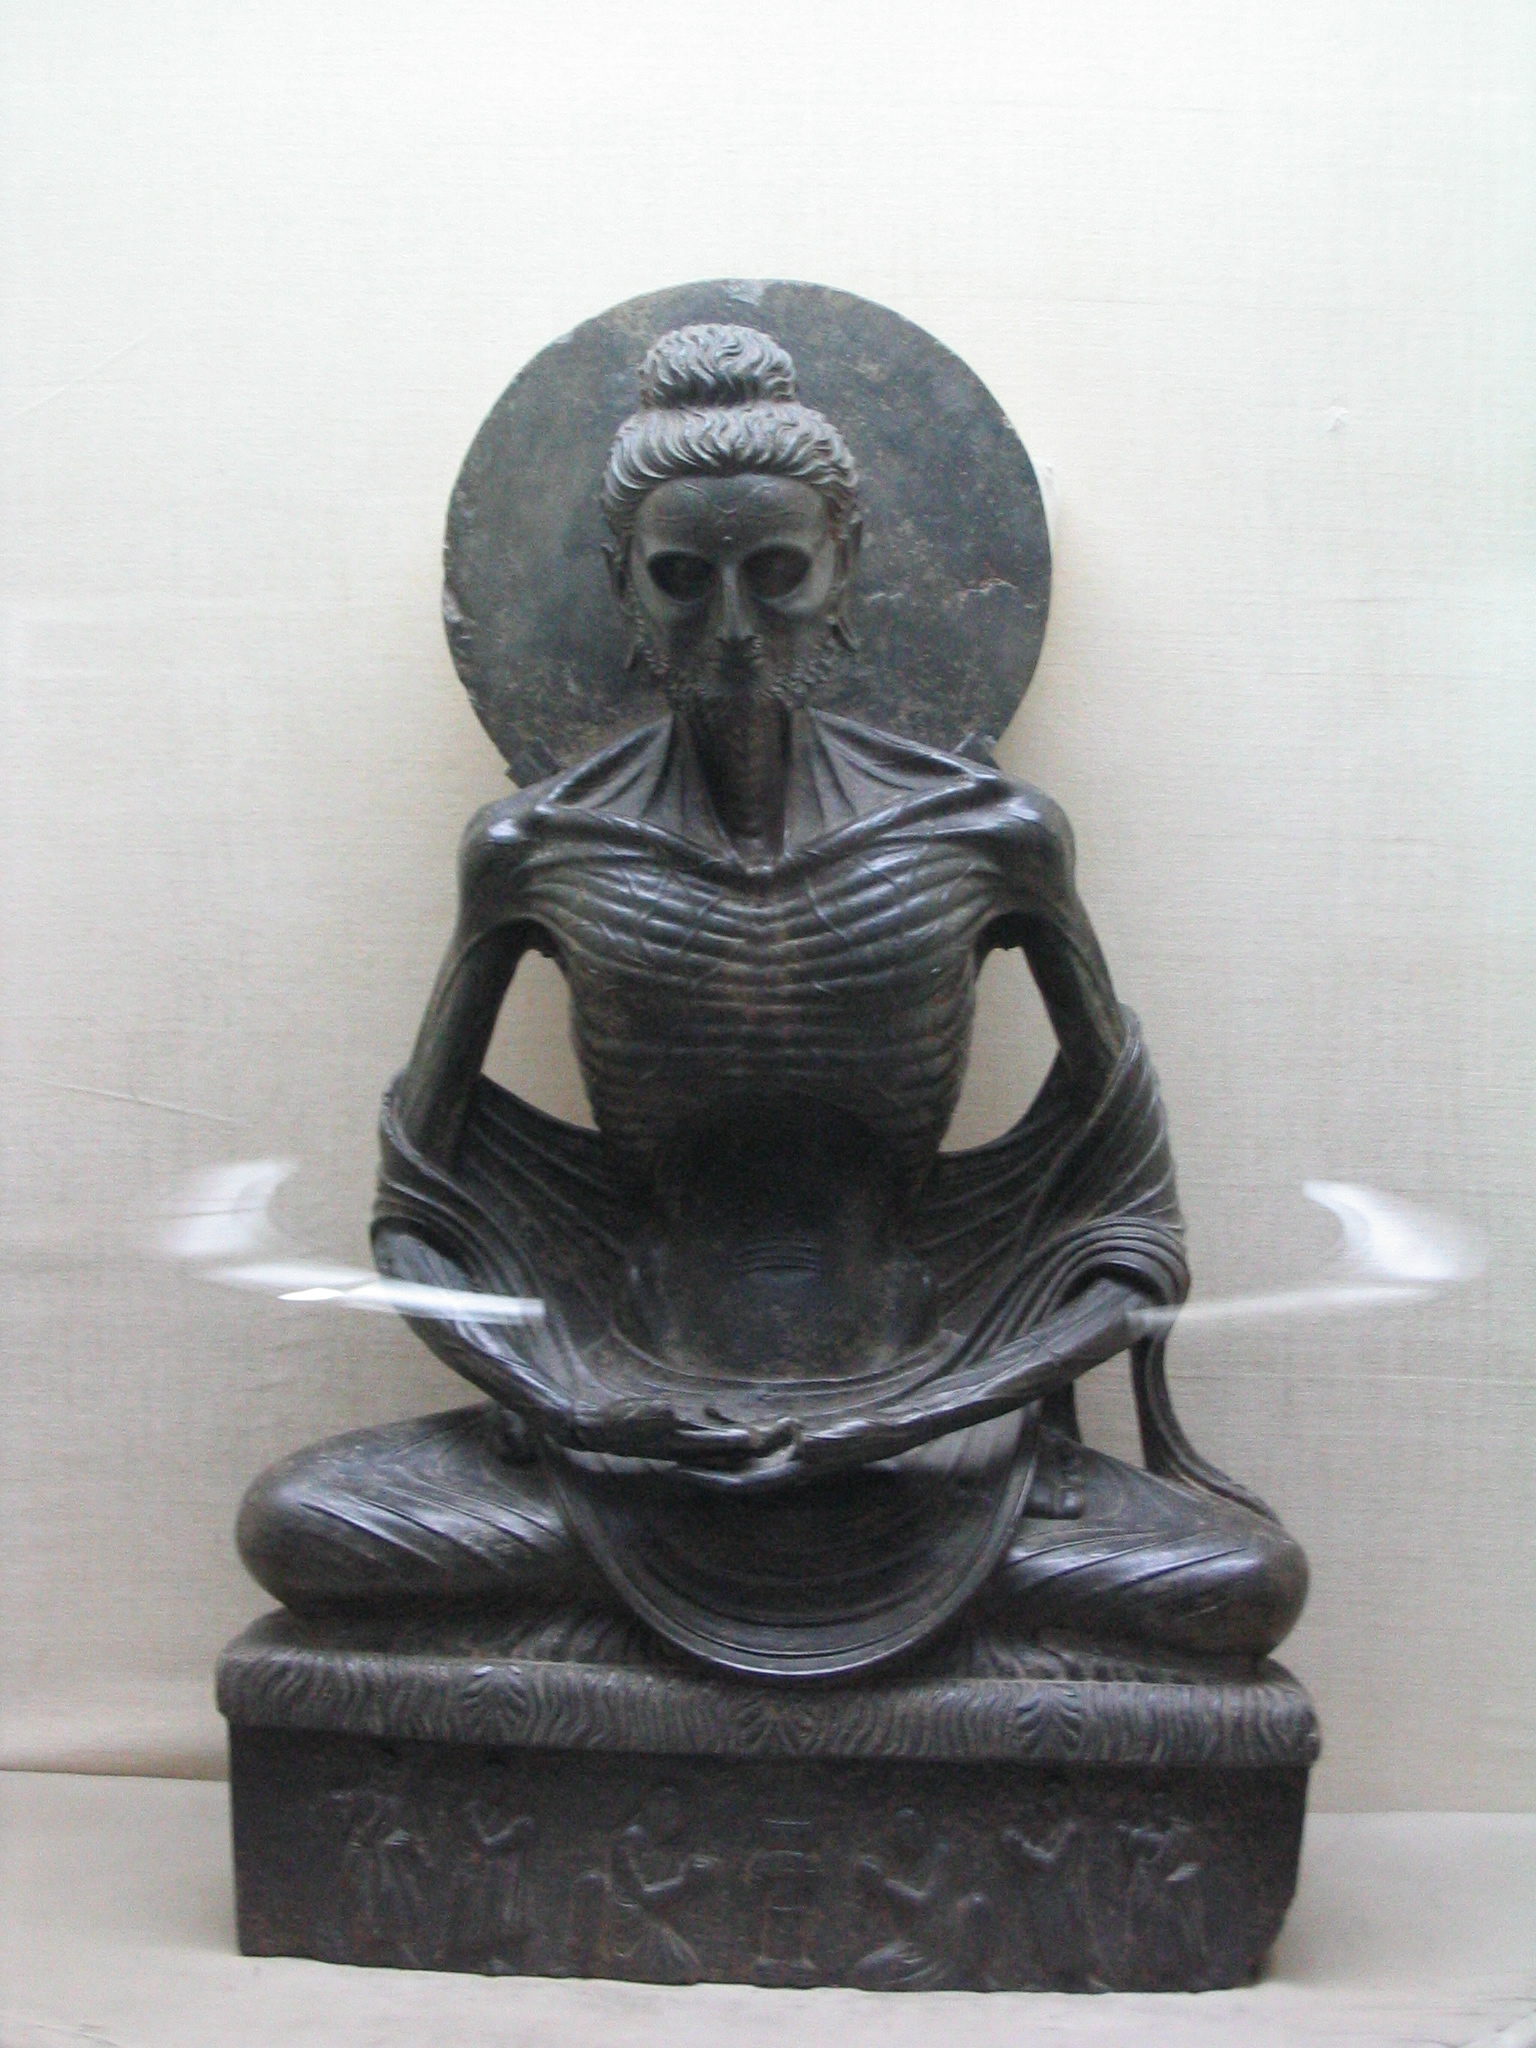 File:Fasting buddha at lahore museum.jpg - Wikimedia Commons